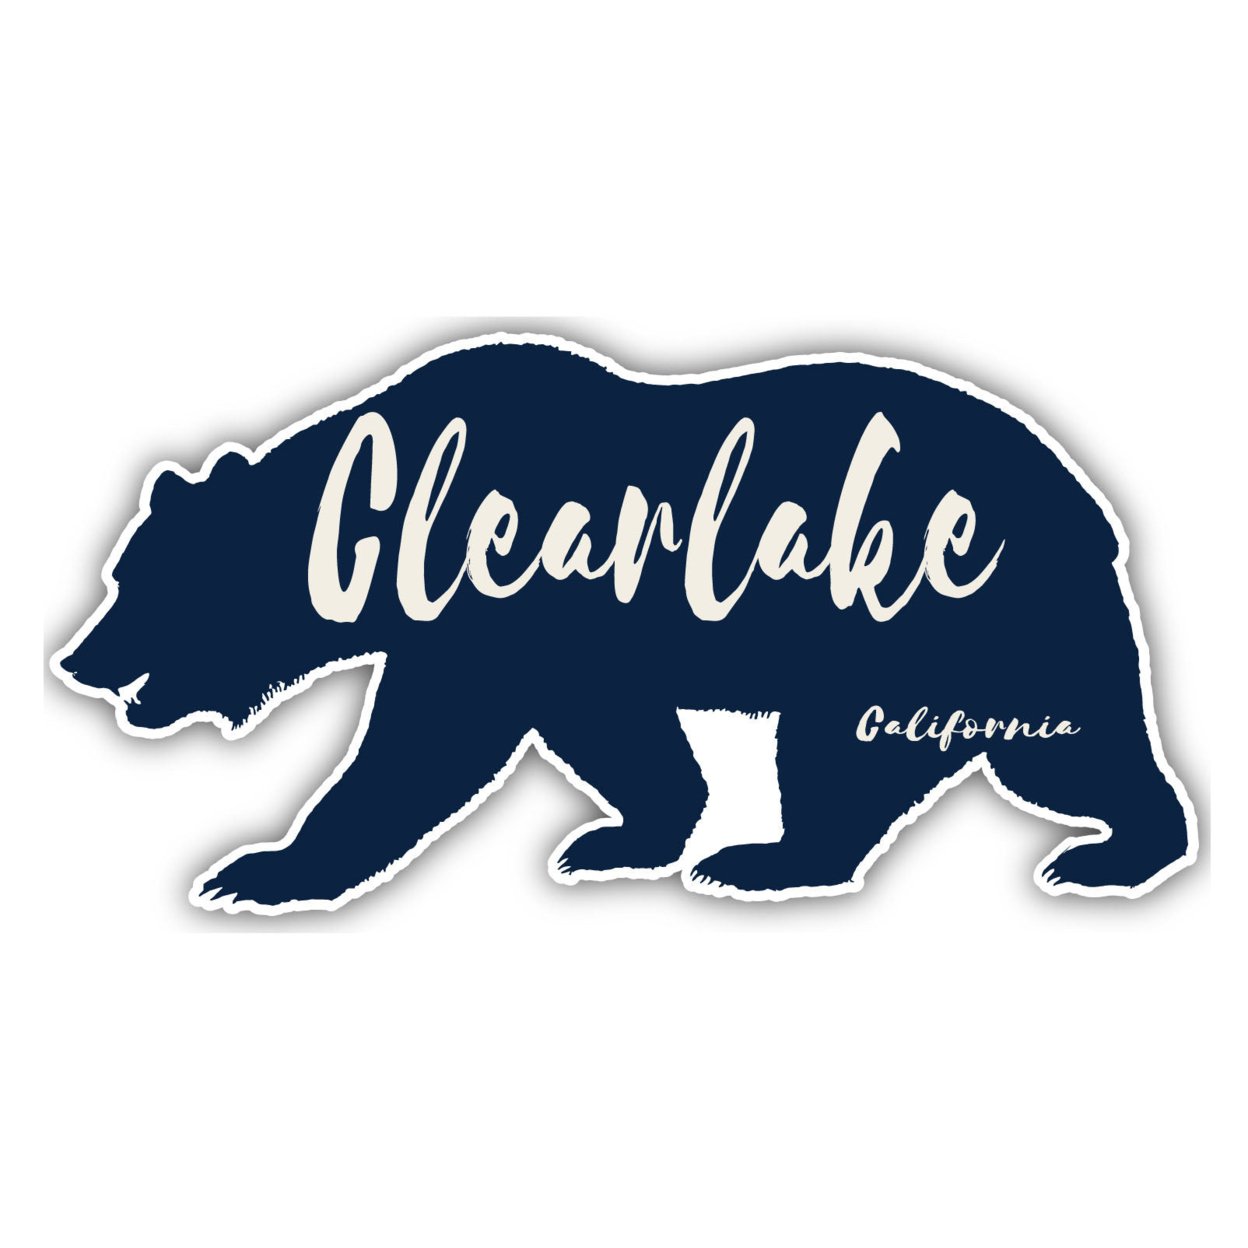 Clearlake California Souvenir Decorative Stickers (Choose Theme And Size) - Single Unit, 2-Inch, Tent